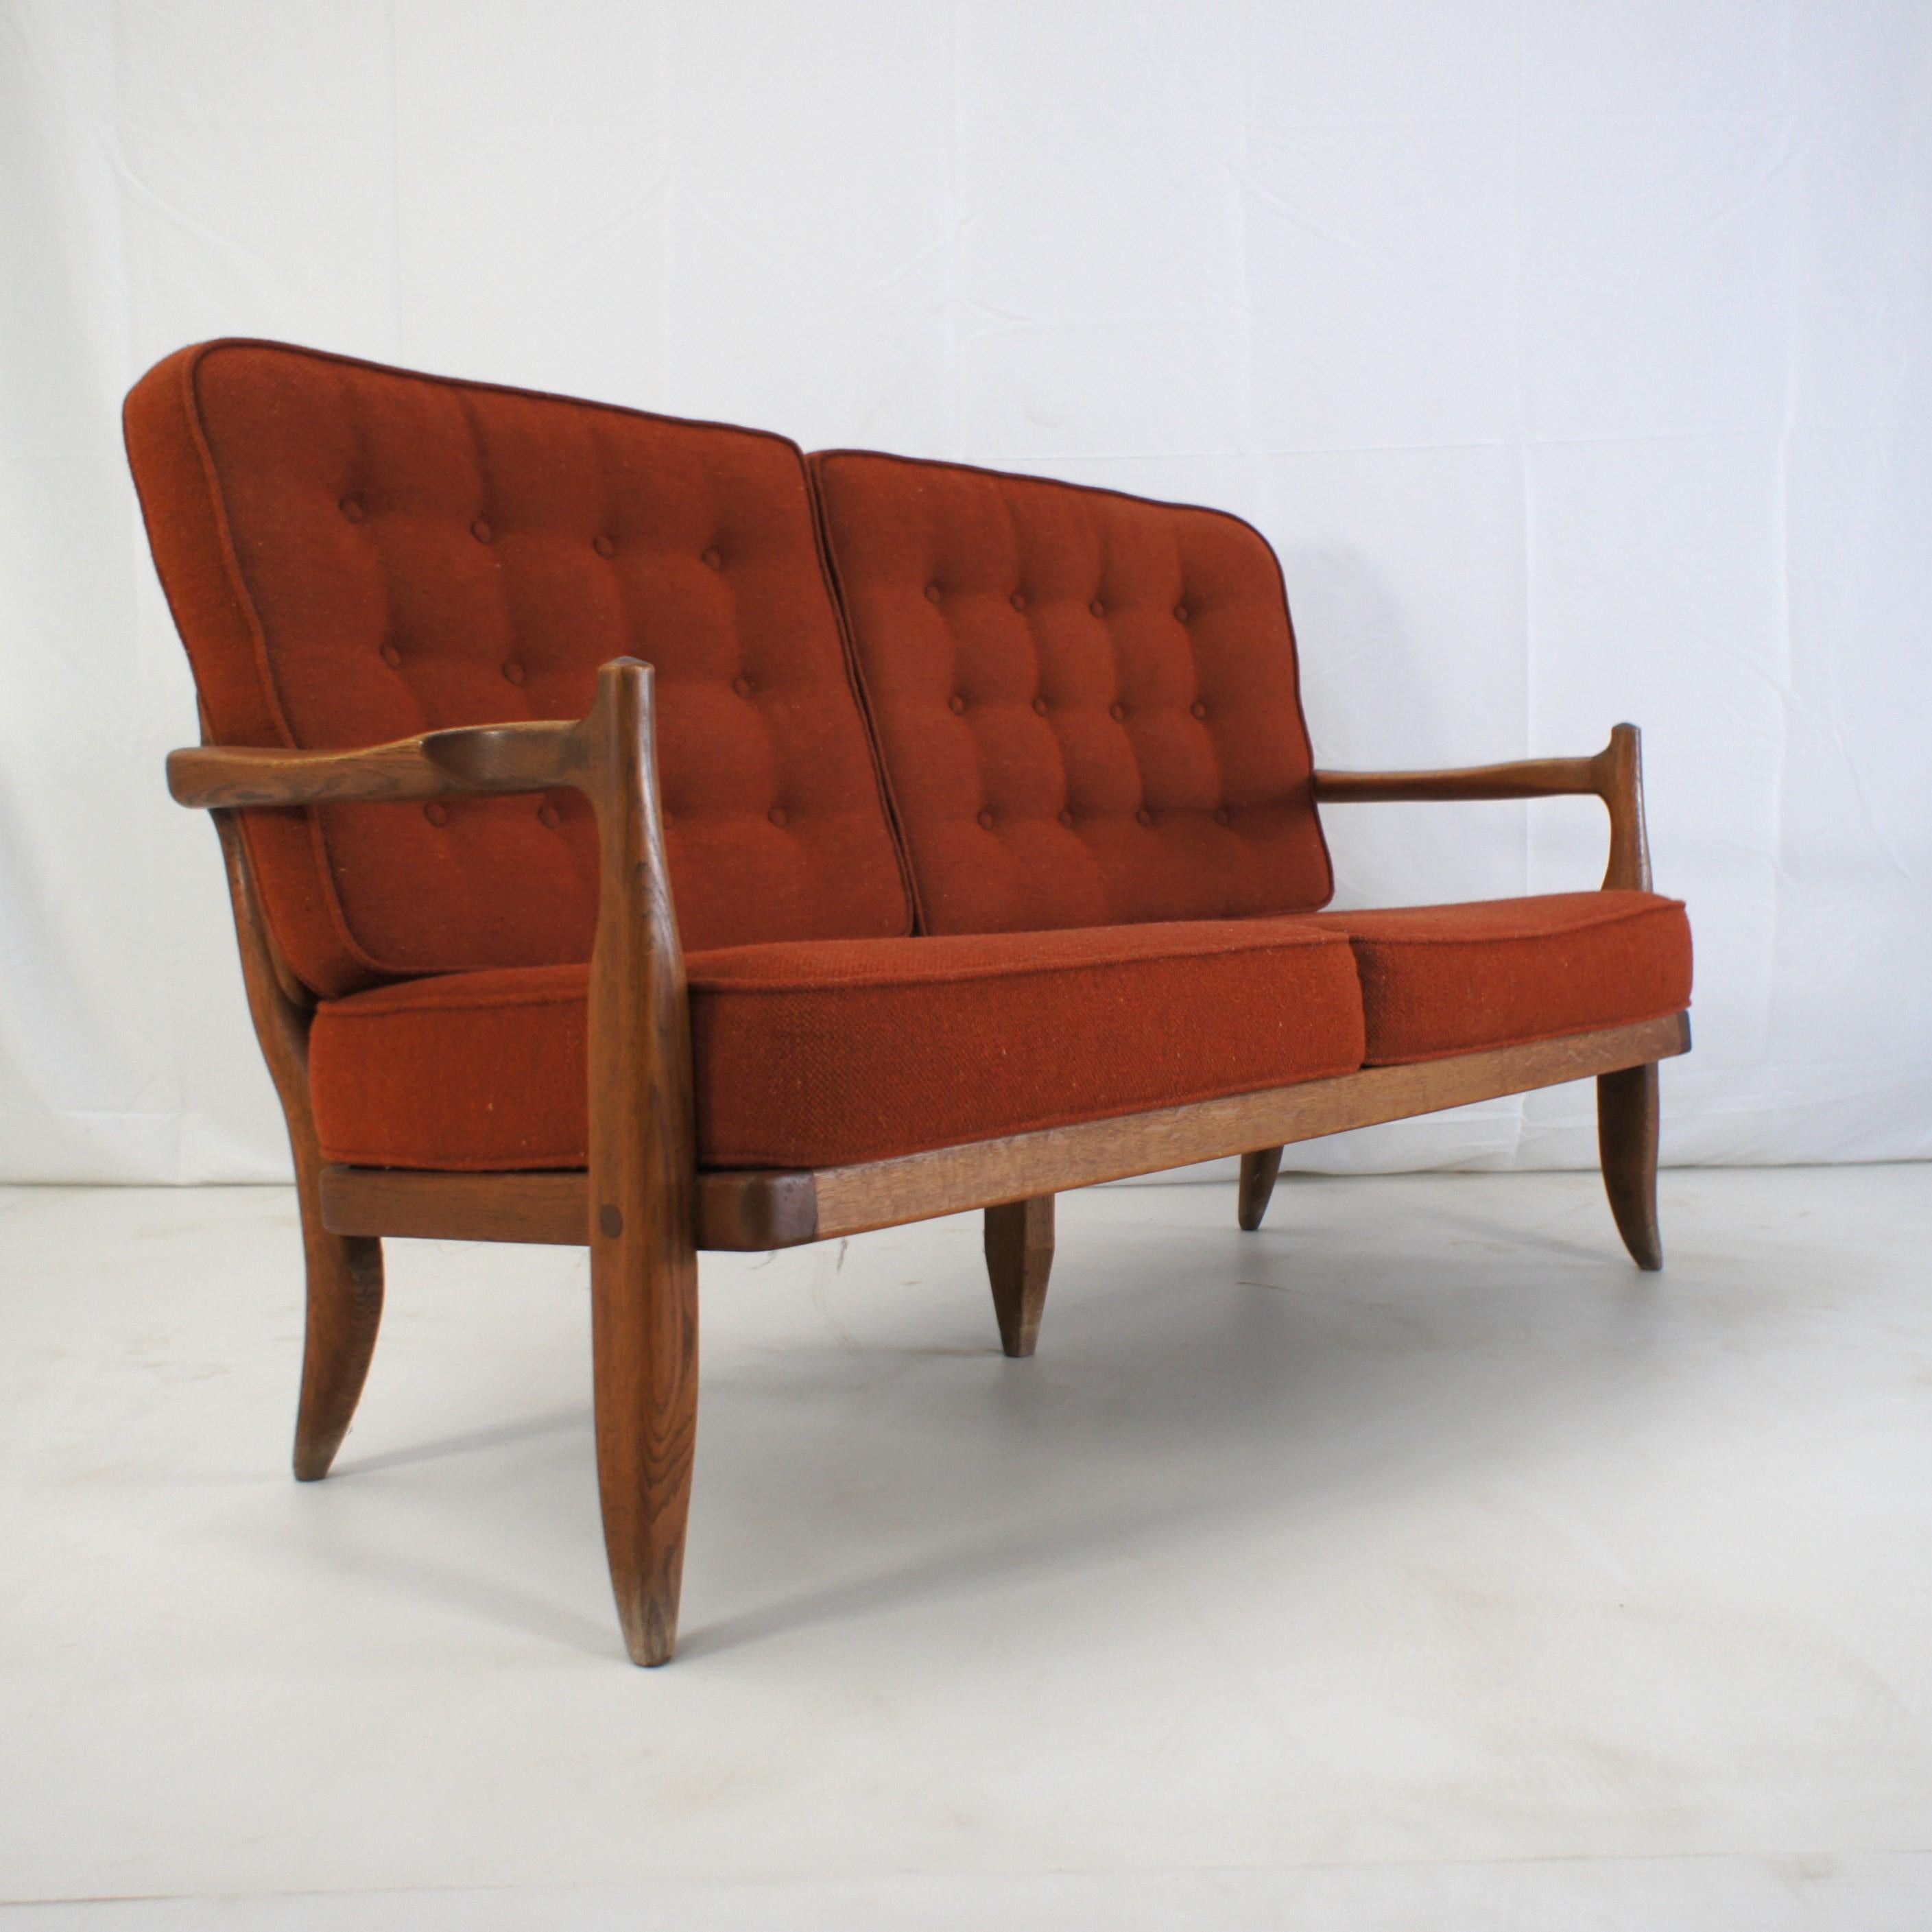 Nice Jose sofa, Guiollerme et Chambron with original terra cota fabrics in good condition.